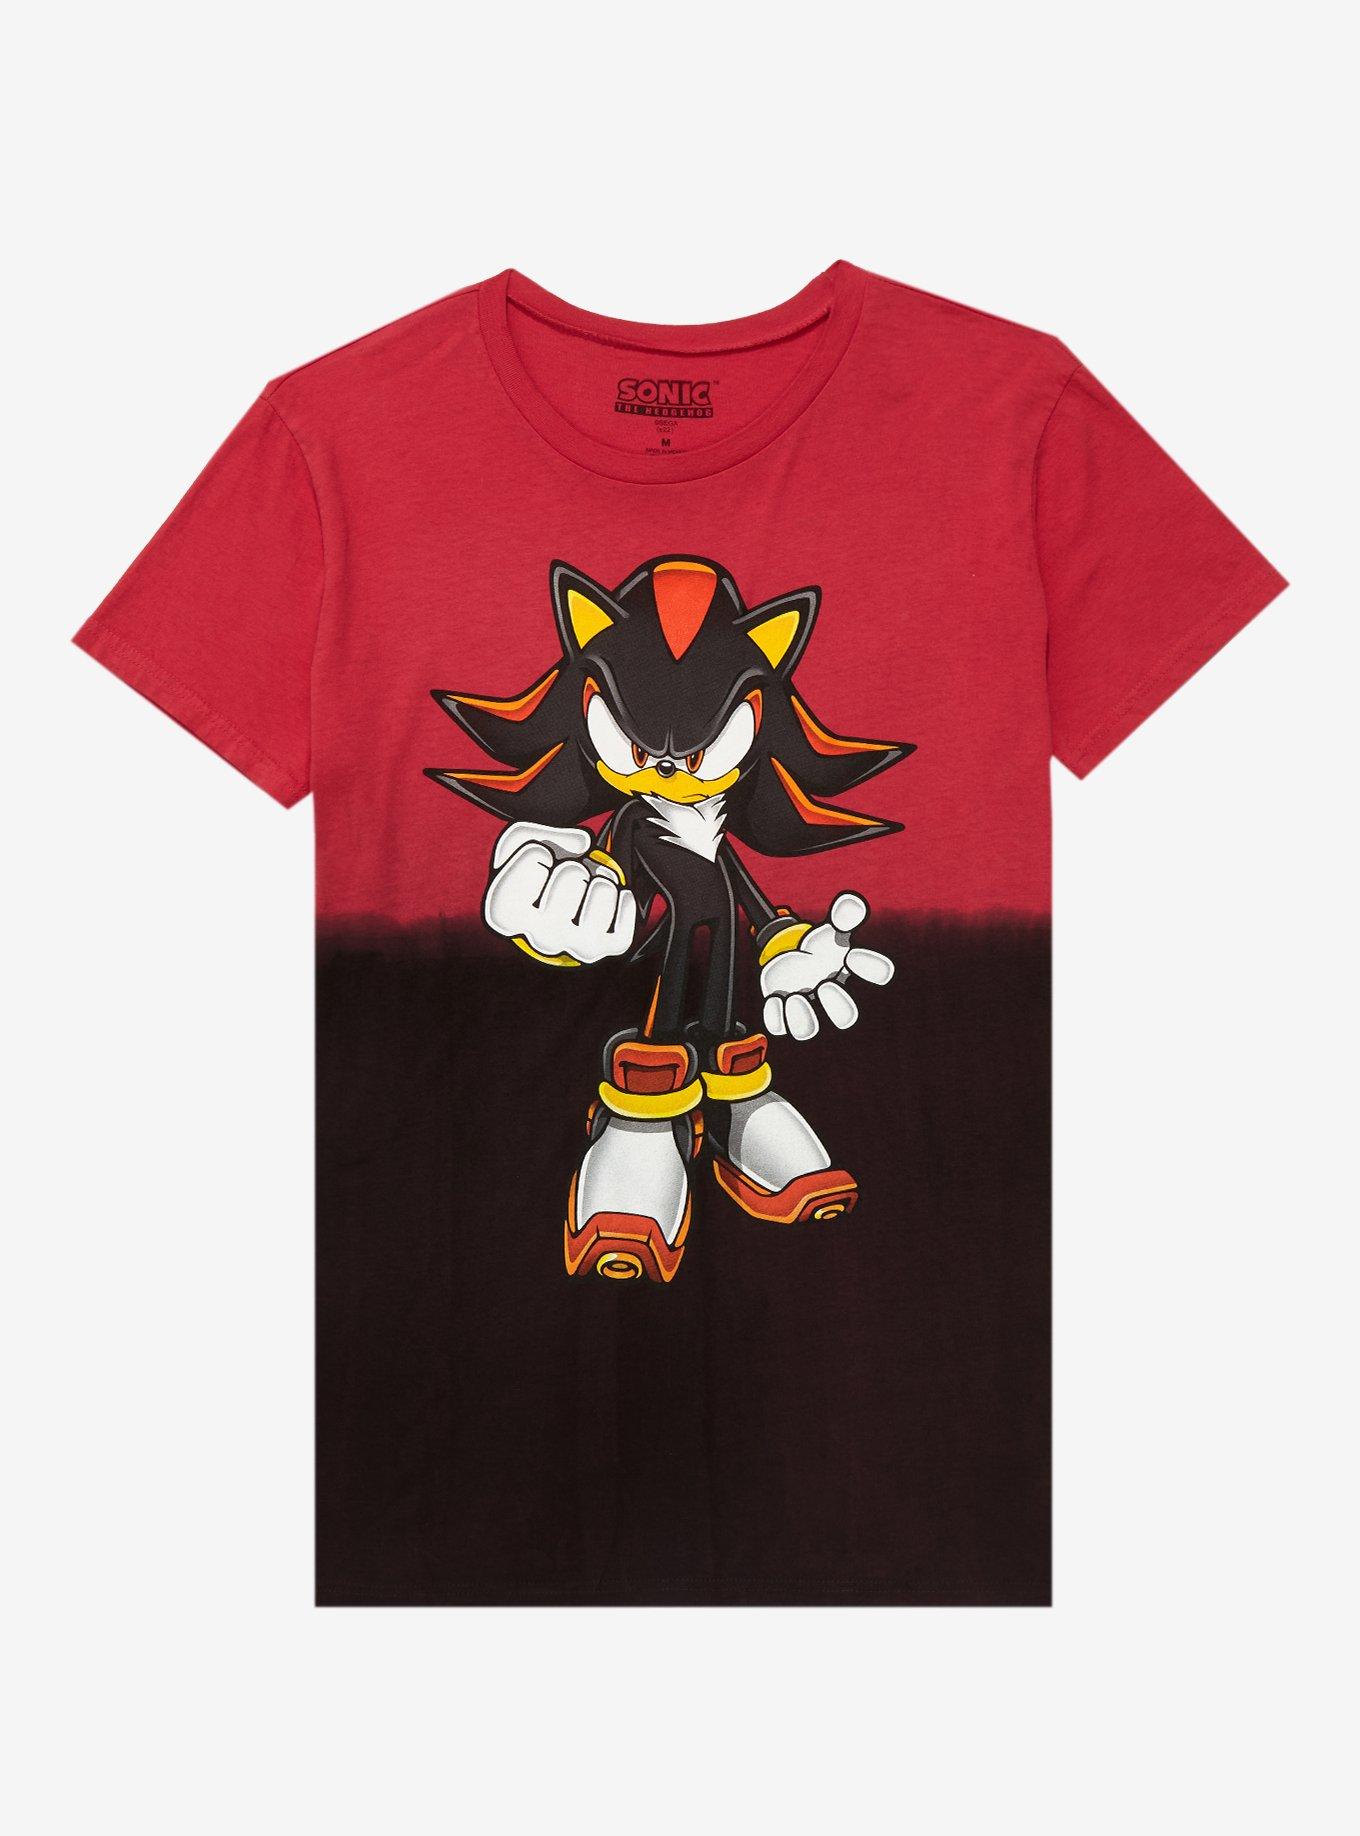 Sonic roblox t shirt